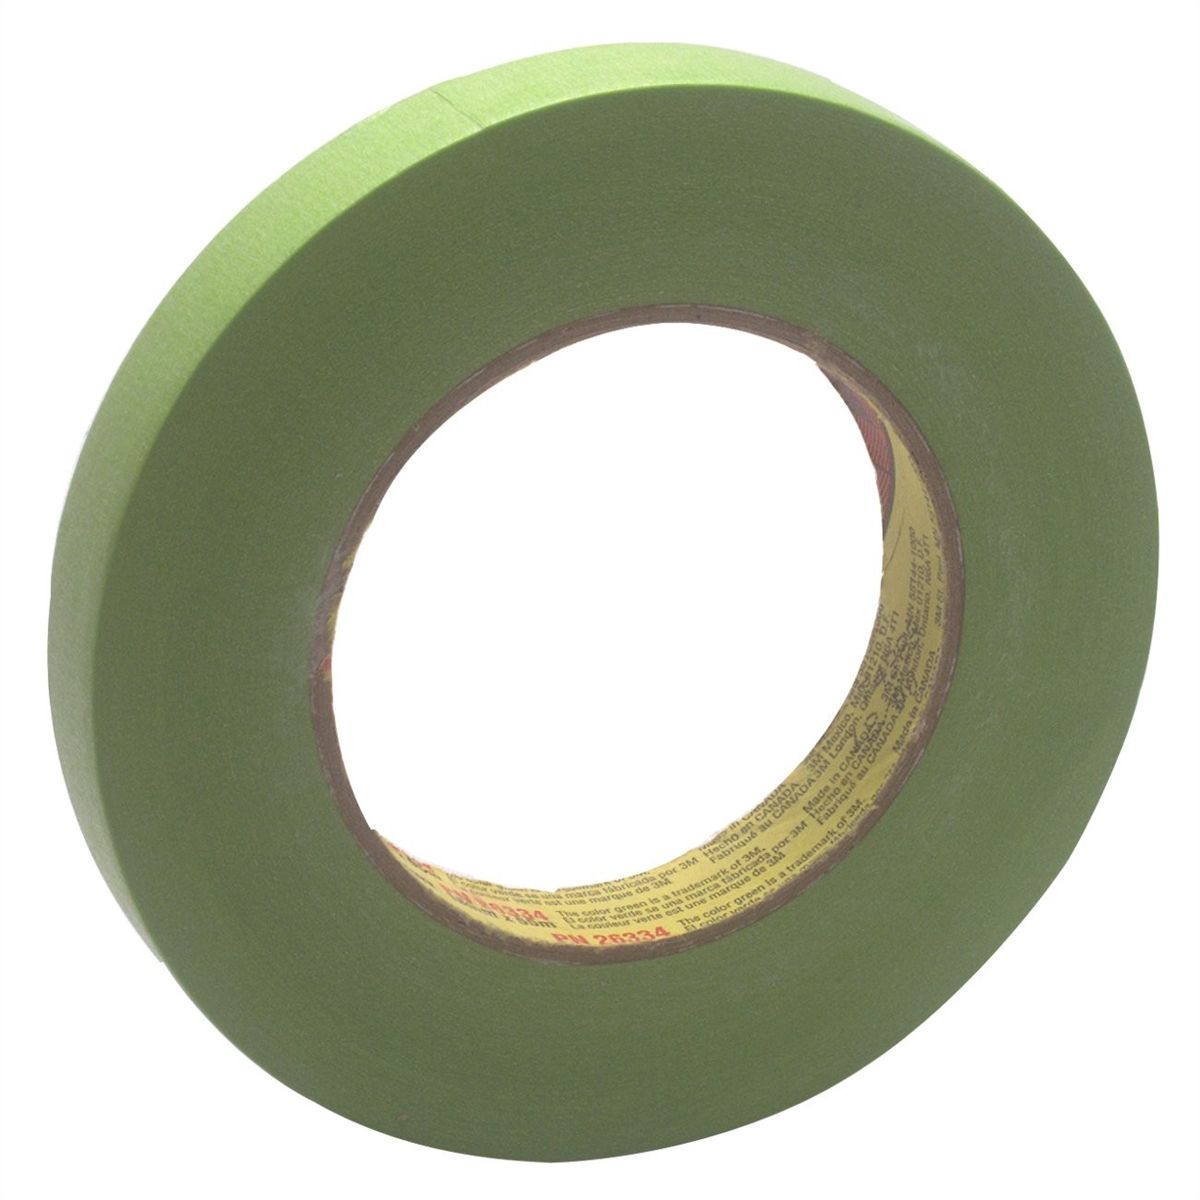 Scotch Performance Green Masking Tape 233+ 18 mm x 60 Yd 48/CS